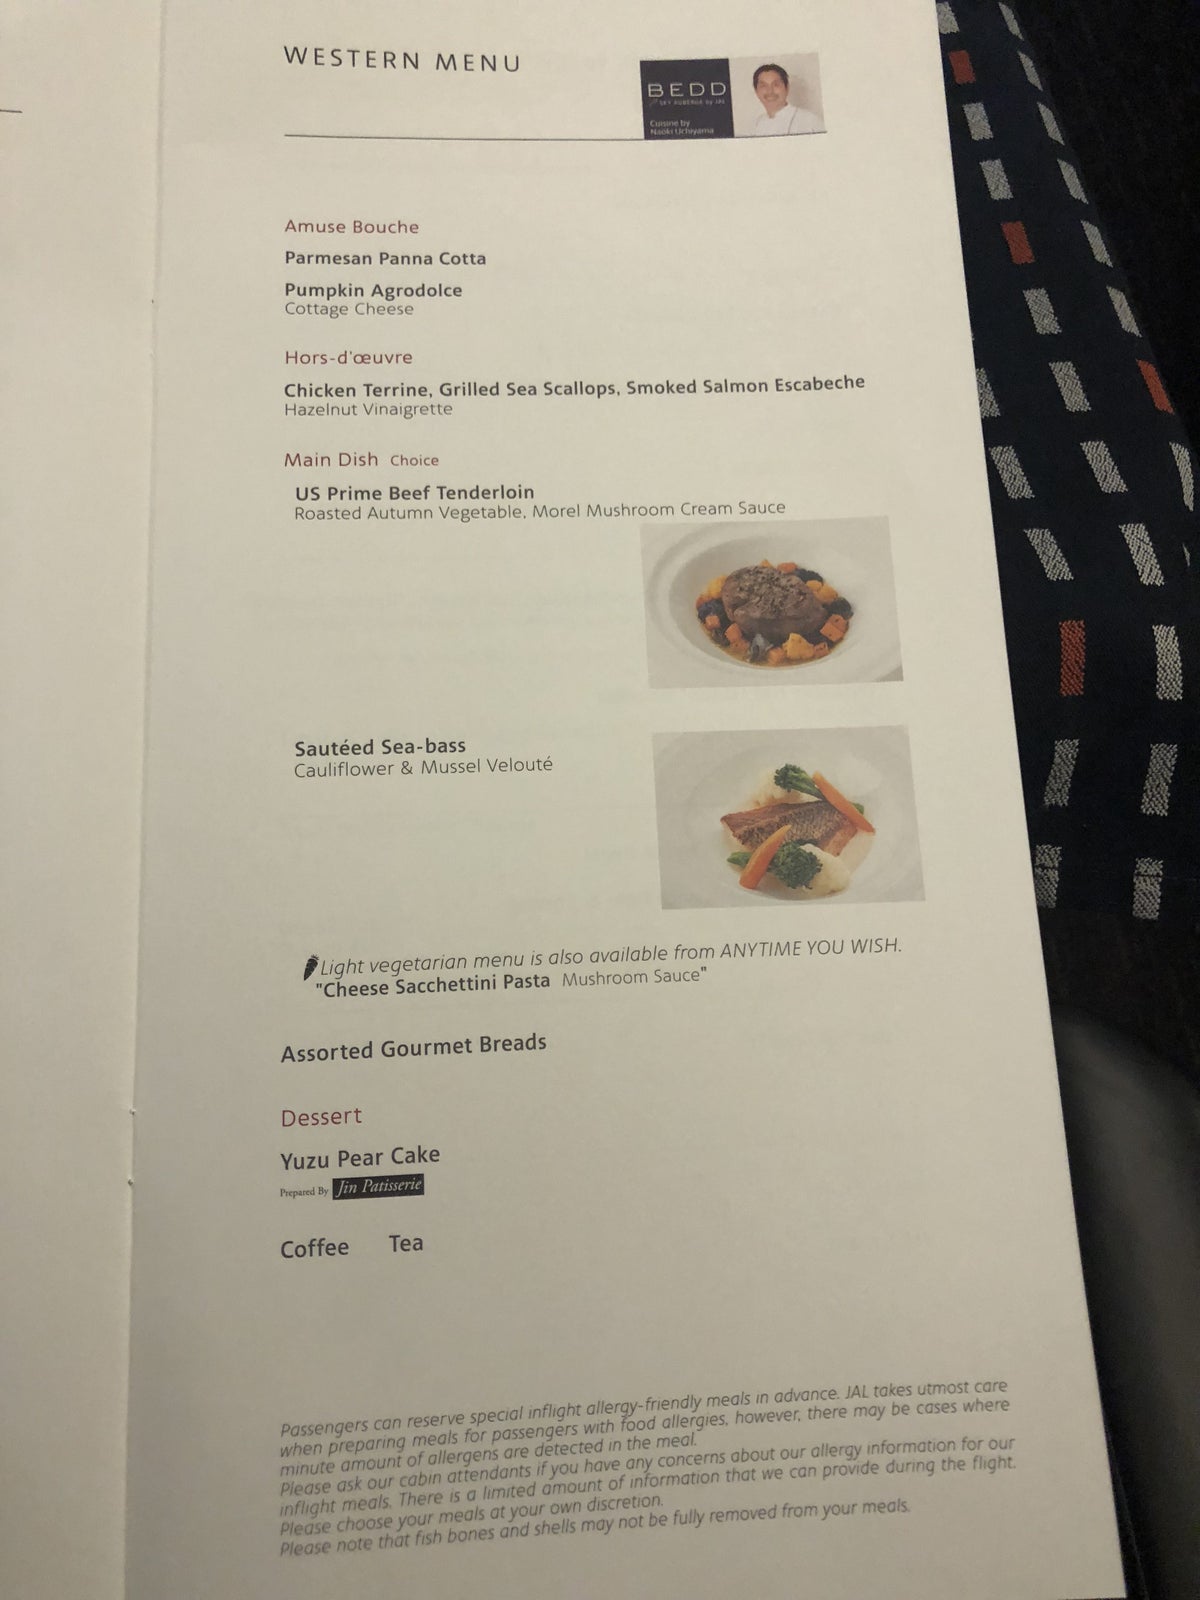 Japan Airlines 777 Business Class Western Cuisine Menu